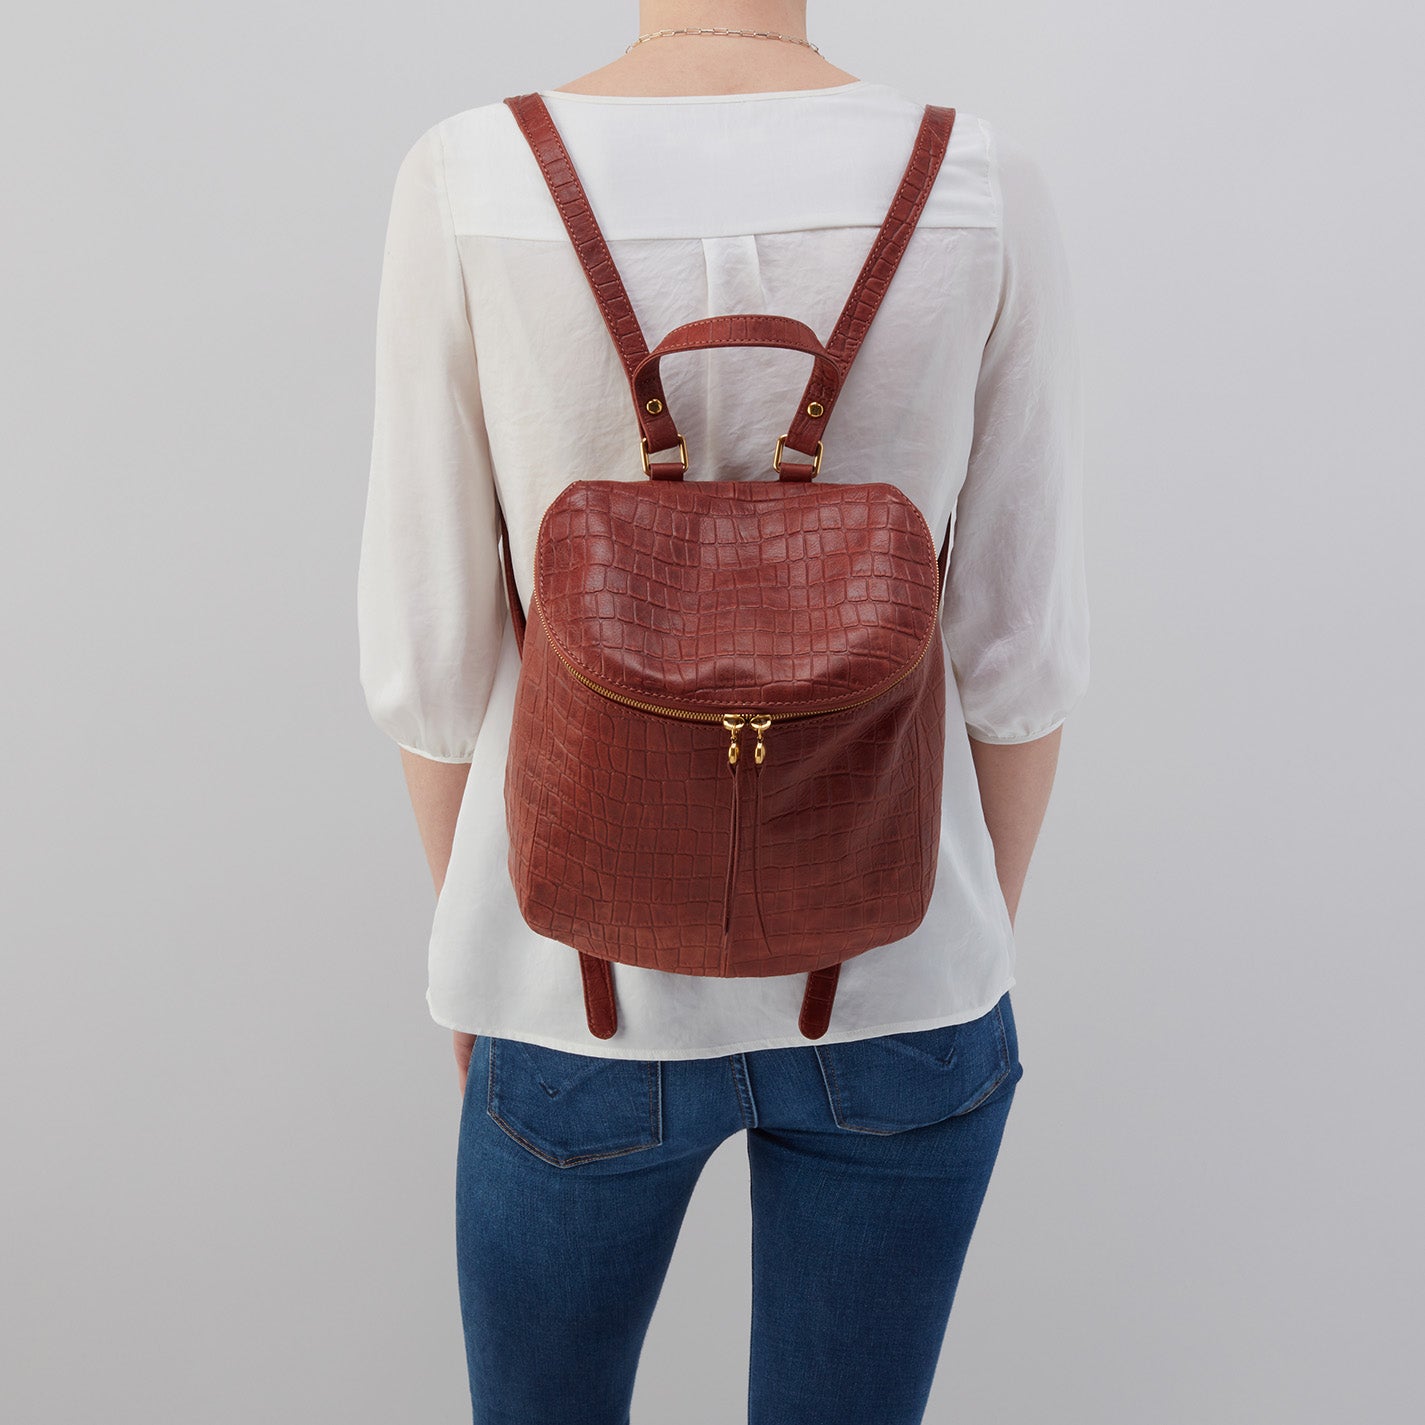 Convertible Backpack Purse for Women Handbag Hobo Tote Satchel Shoulder Bag  - Smooth Dark Purple/61 (Color : U6216#203#l.Pink) : Amazon.ca: Clothing,  Shoes & Accessories